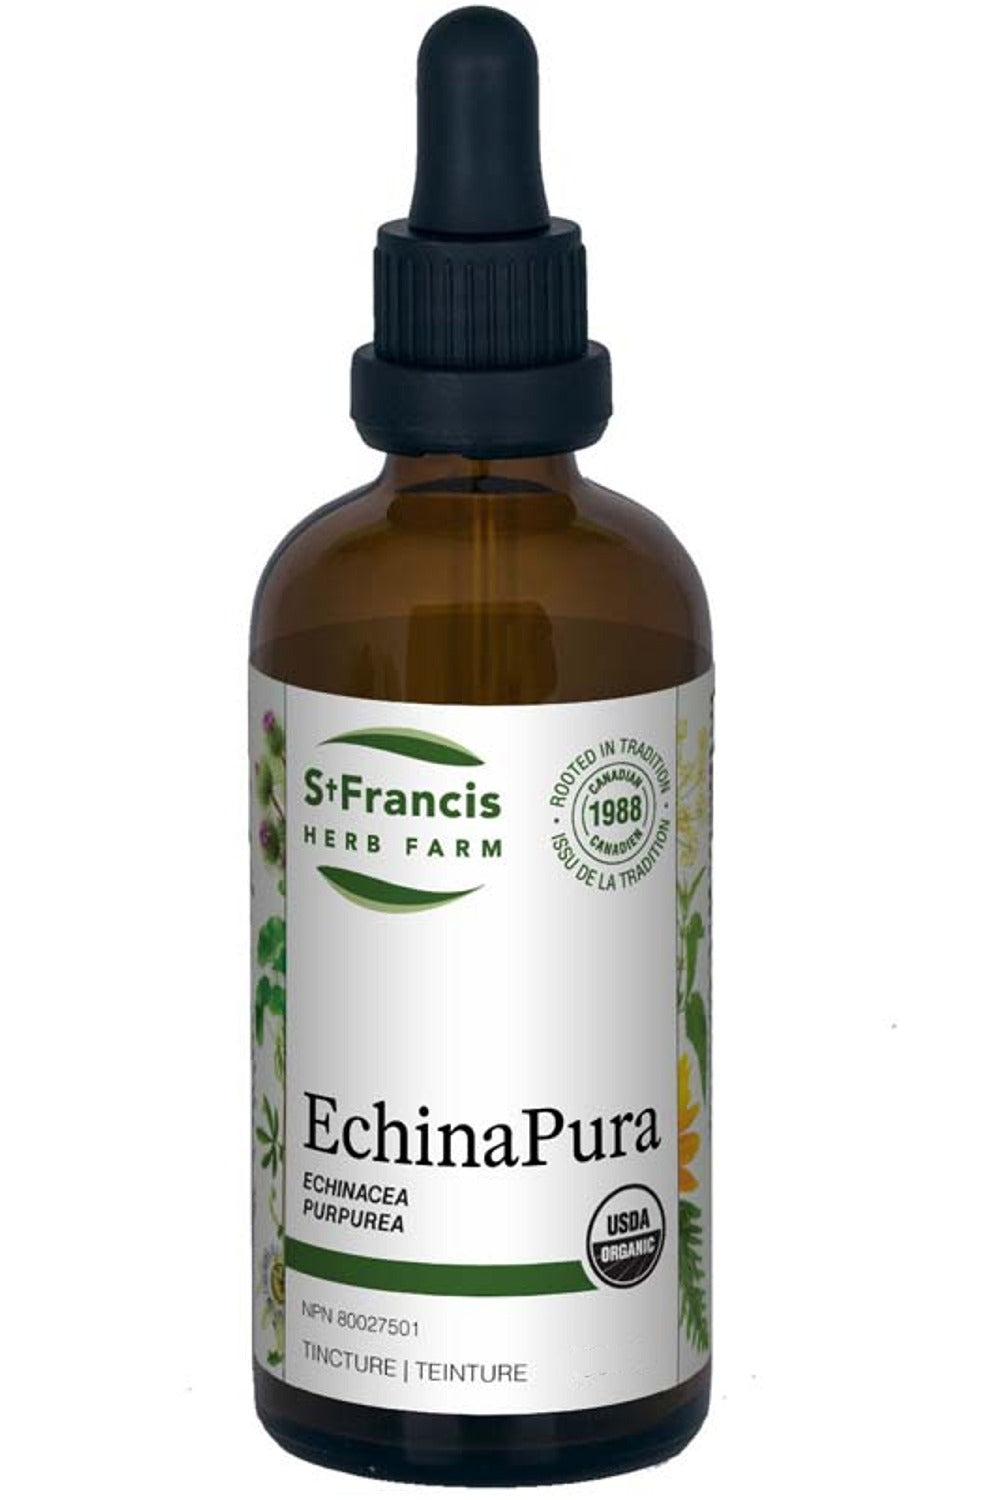 ST FRANCIS HERB FARM Echinapura (50 ml)